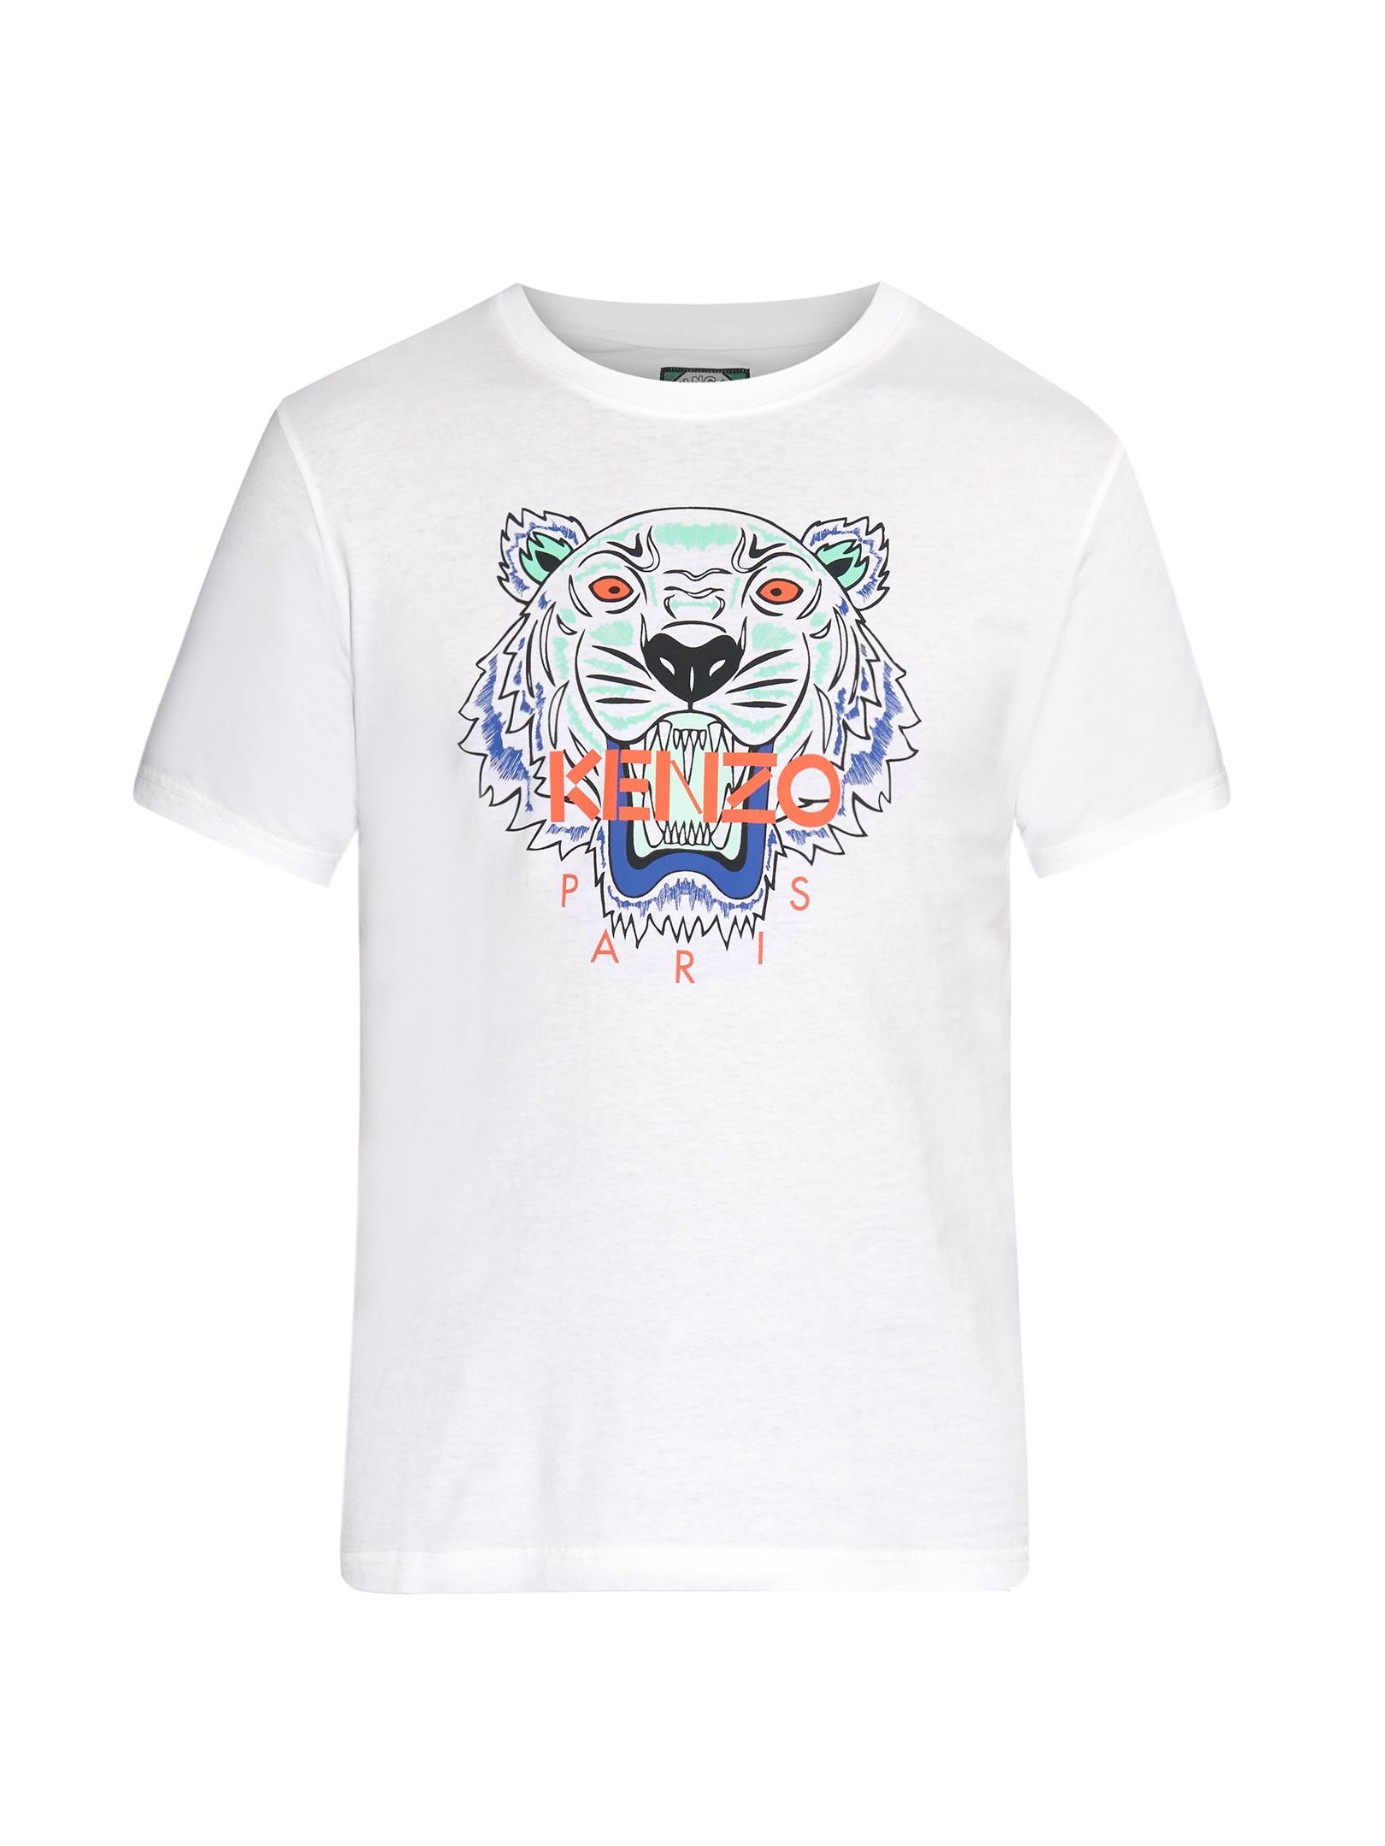 Lyst - Kenzo Tiger-Print T-Shirt in White for Men